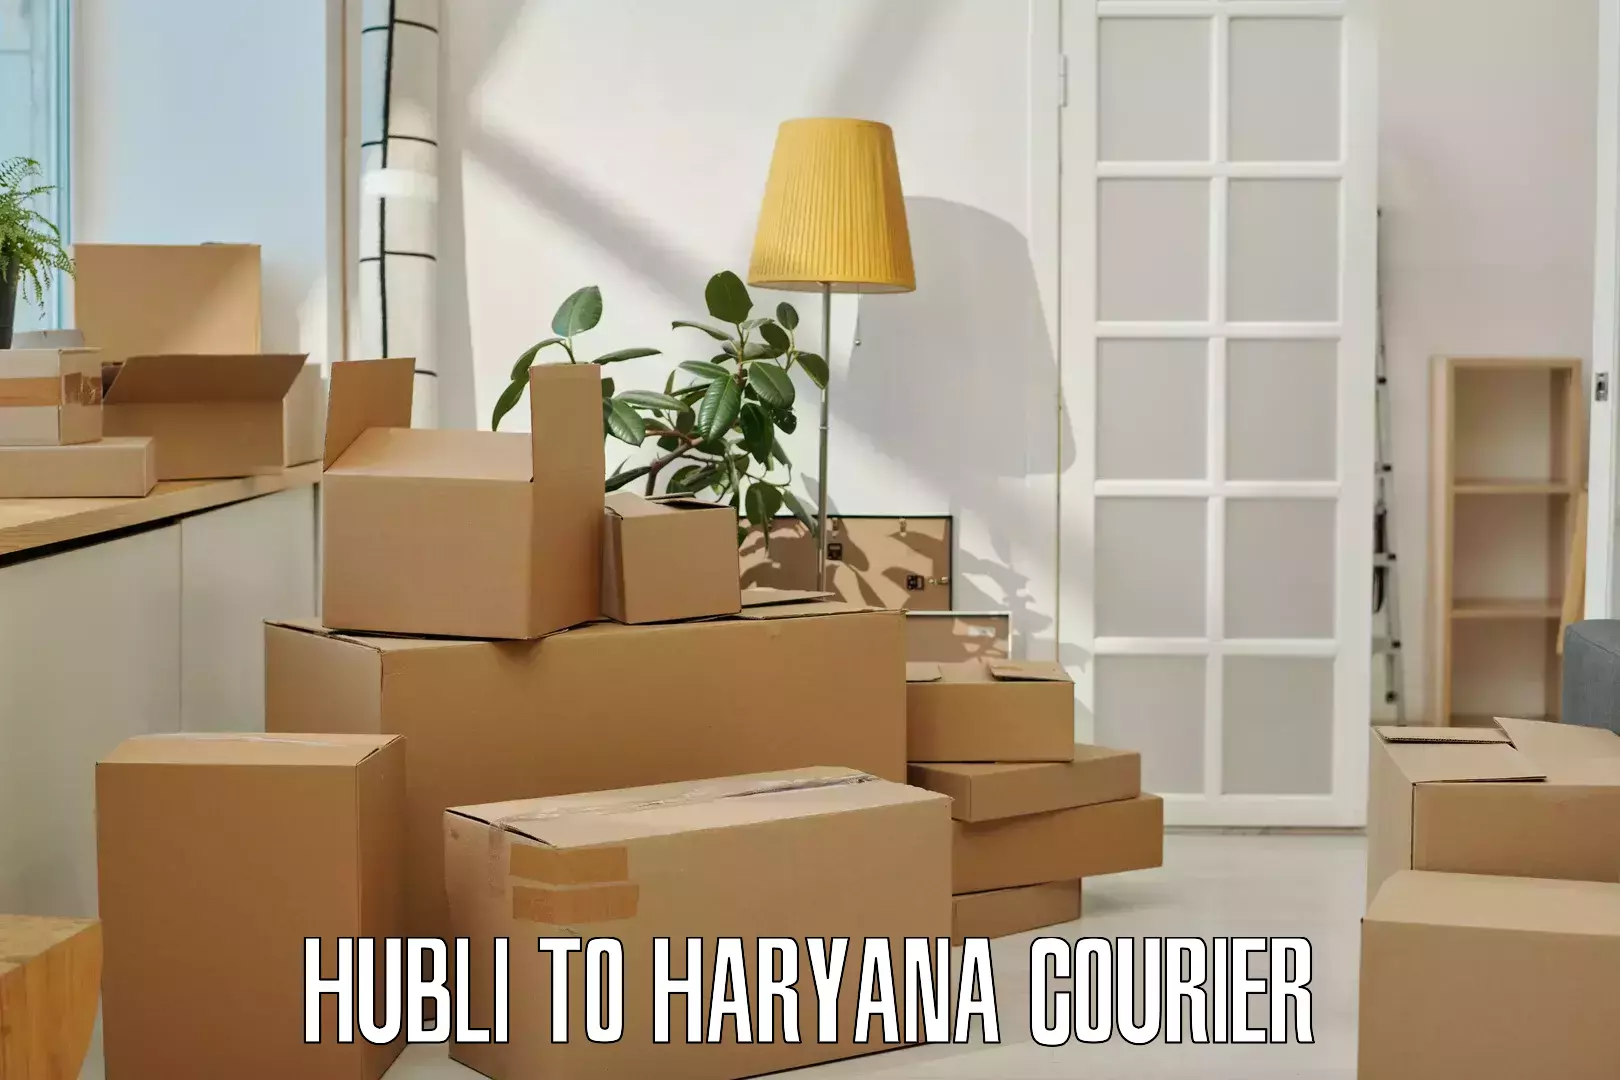 Doorstep delivery service Hubli to Gurgaon